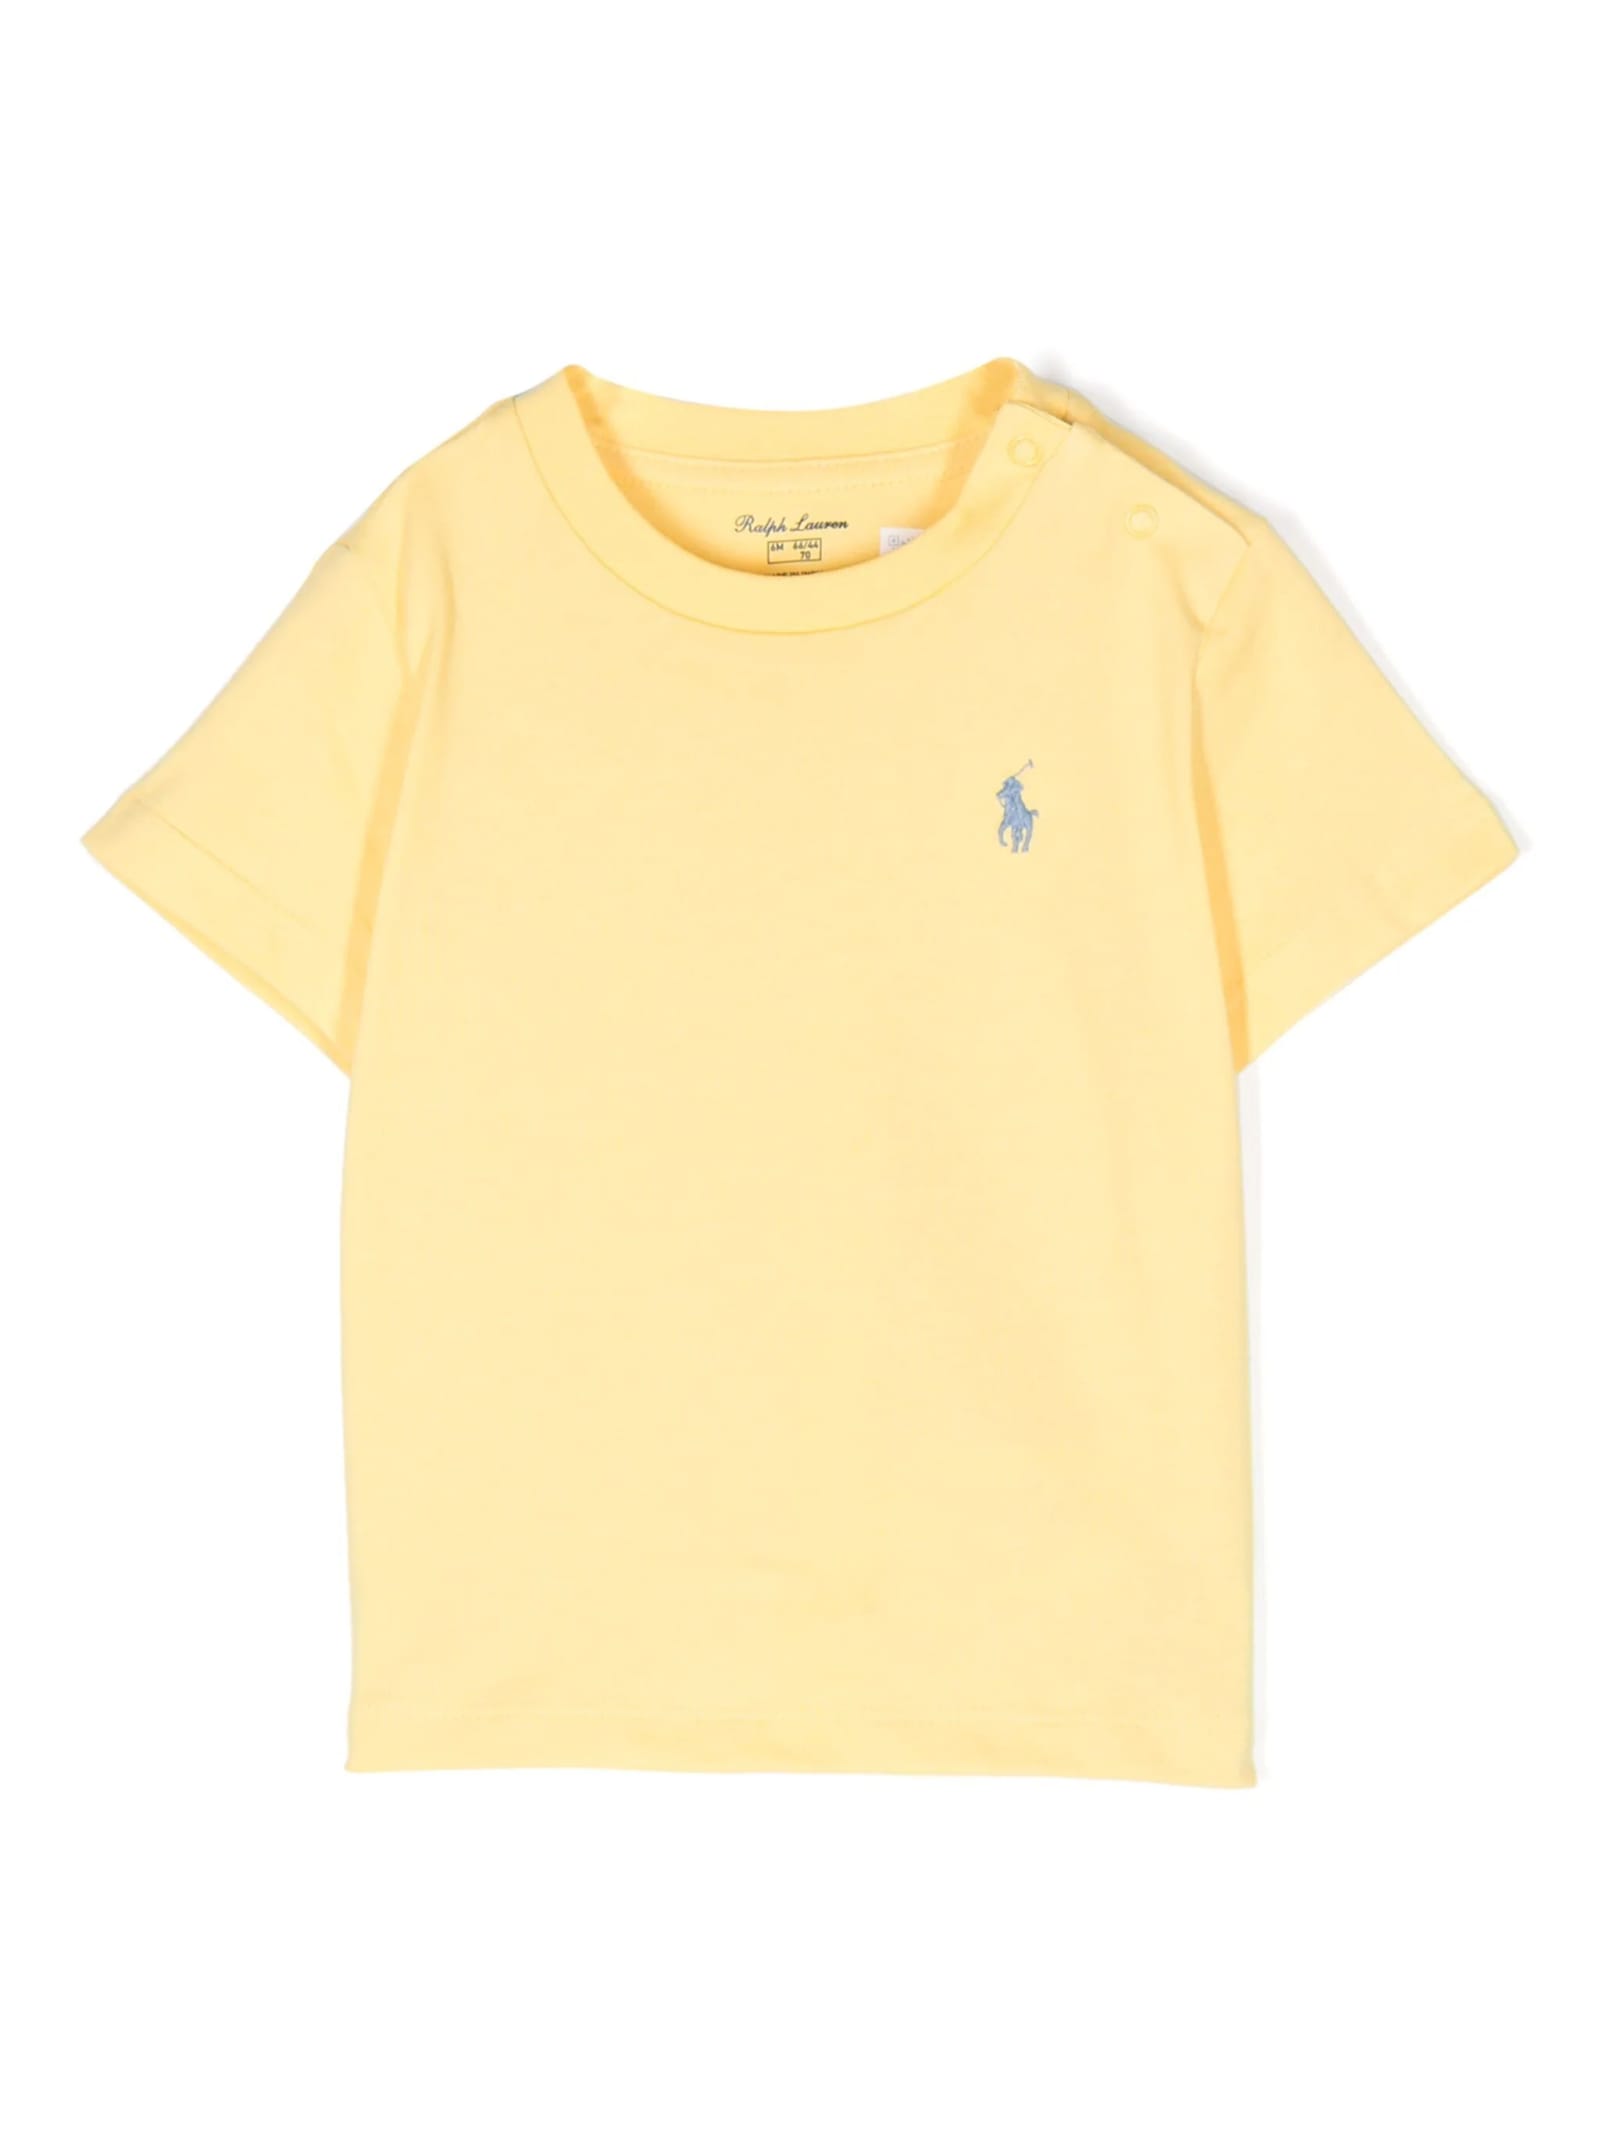 Ralph Lauren Babies' Yellow T-shirt With Blue Pony